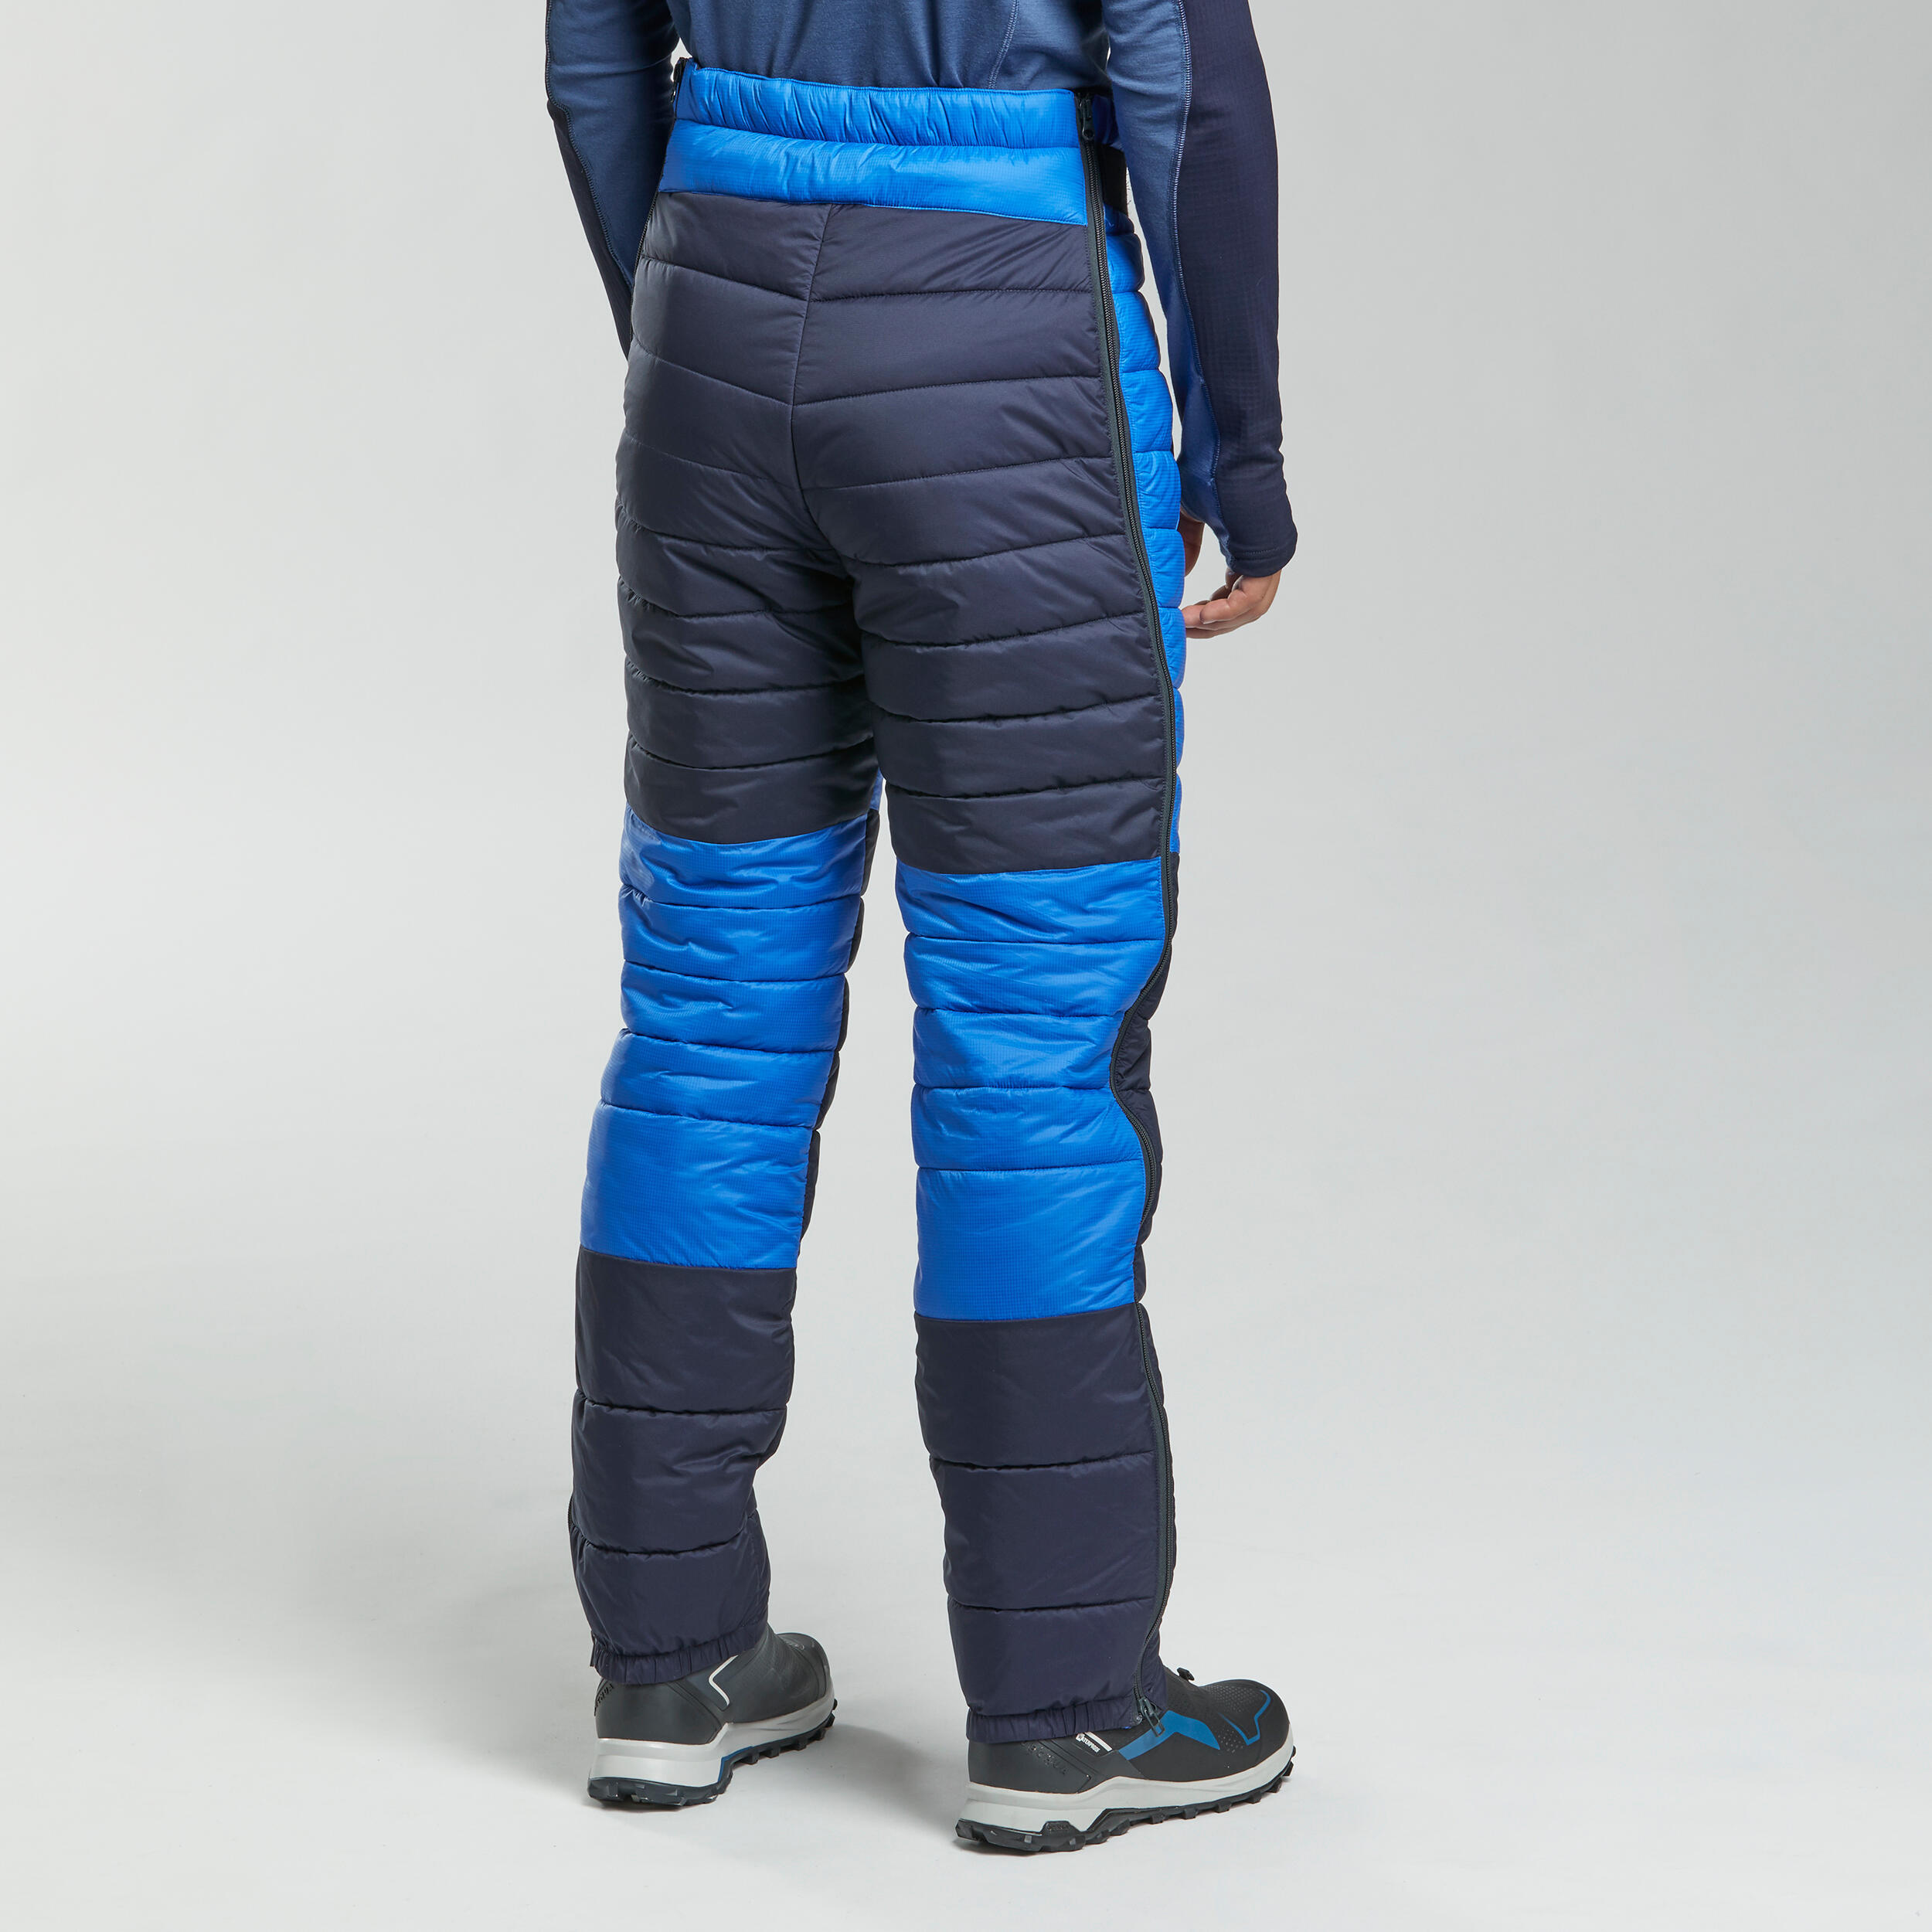 Warm and waterproof 3in1 trekking trousers - Artic 900 - Unisex 13/14